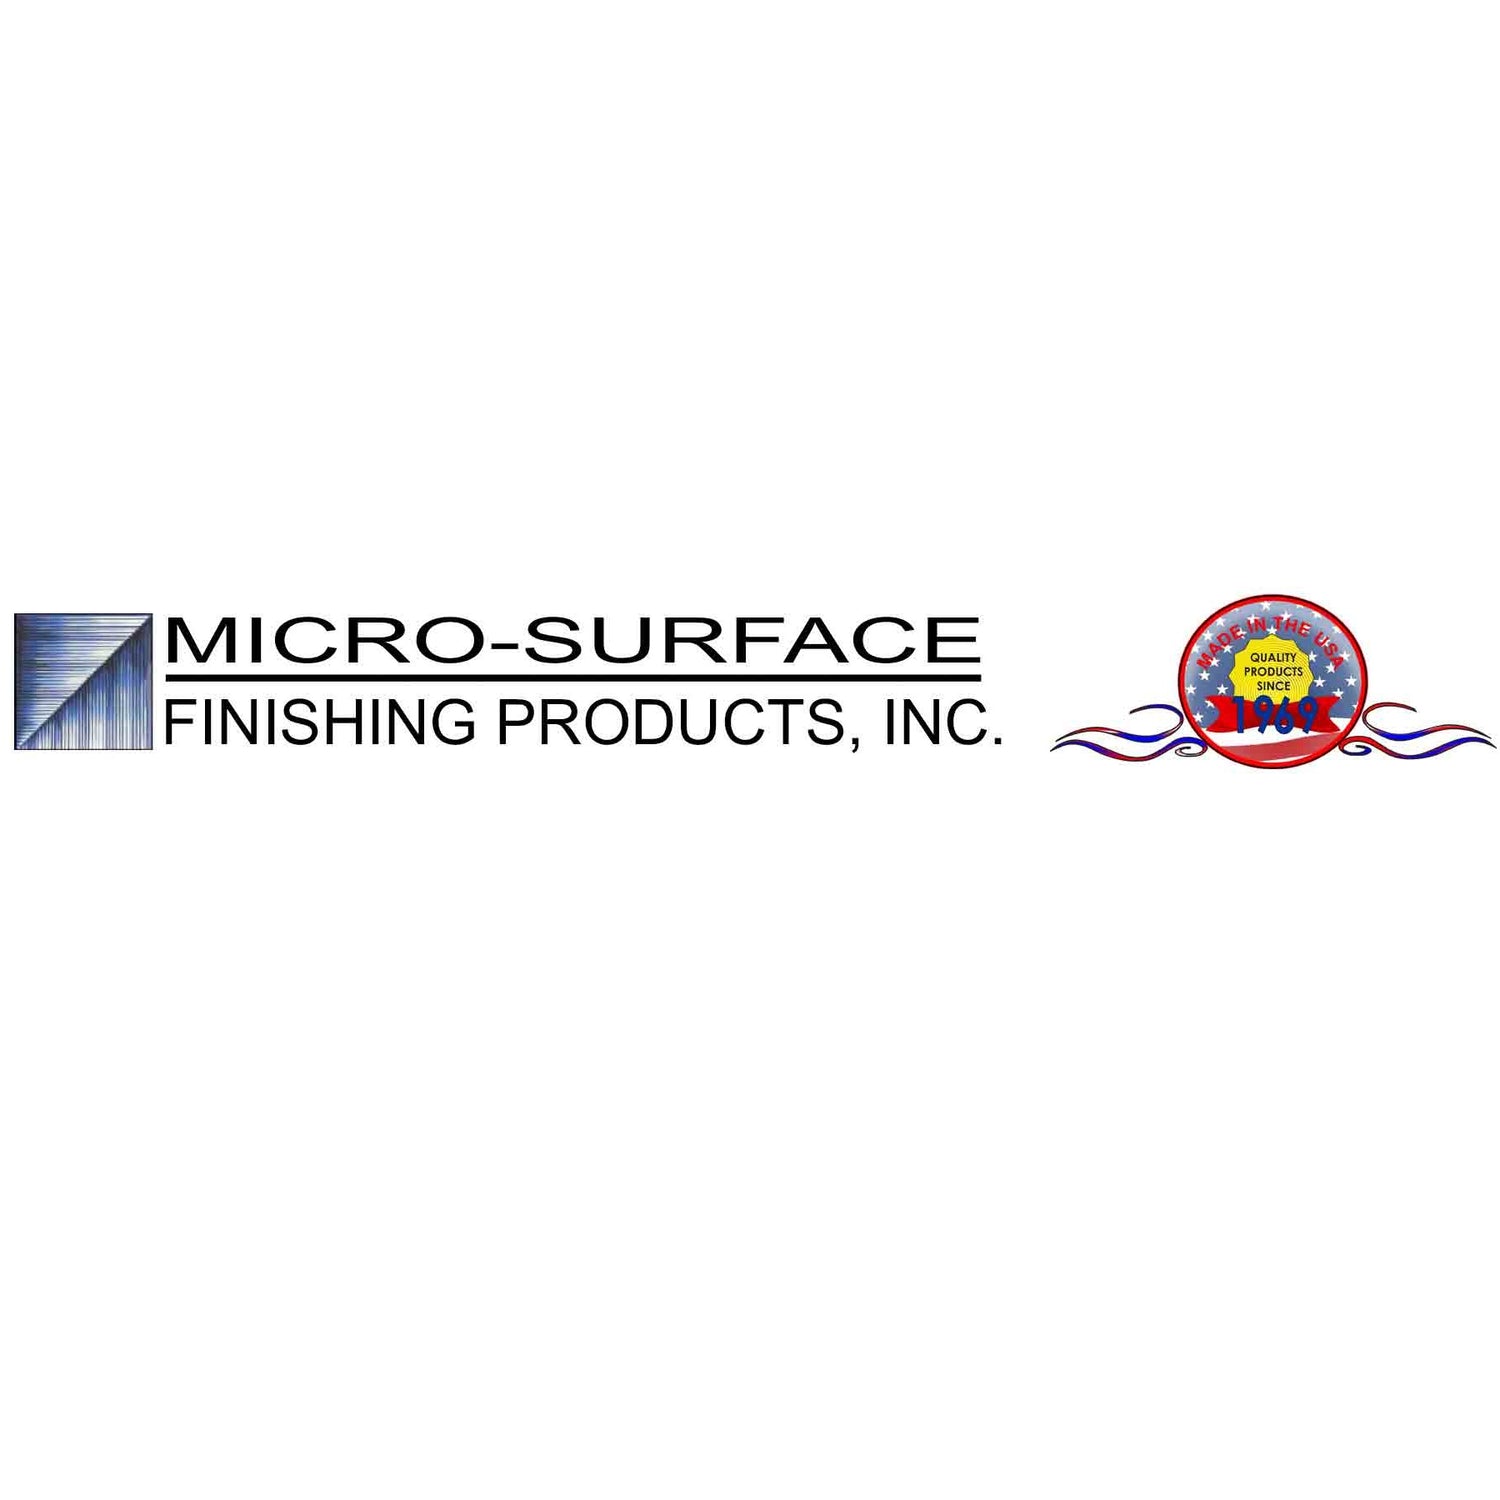 Micro-Surface